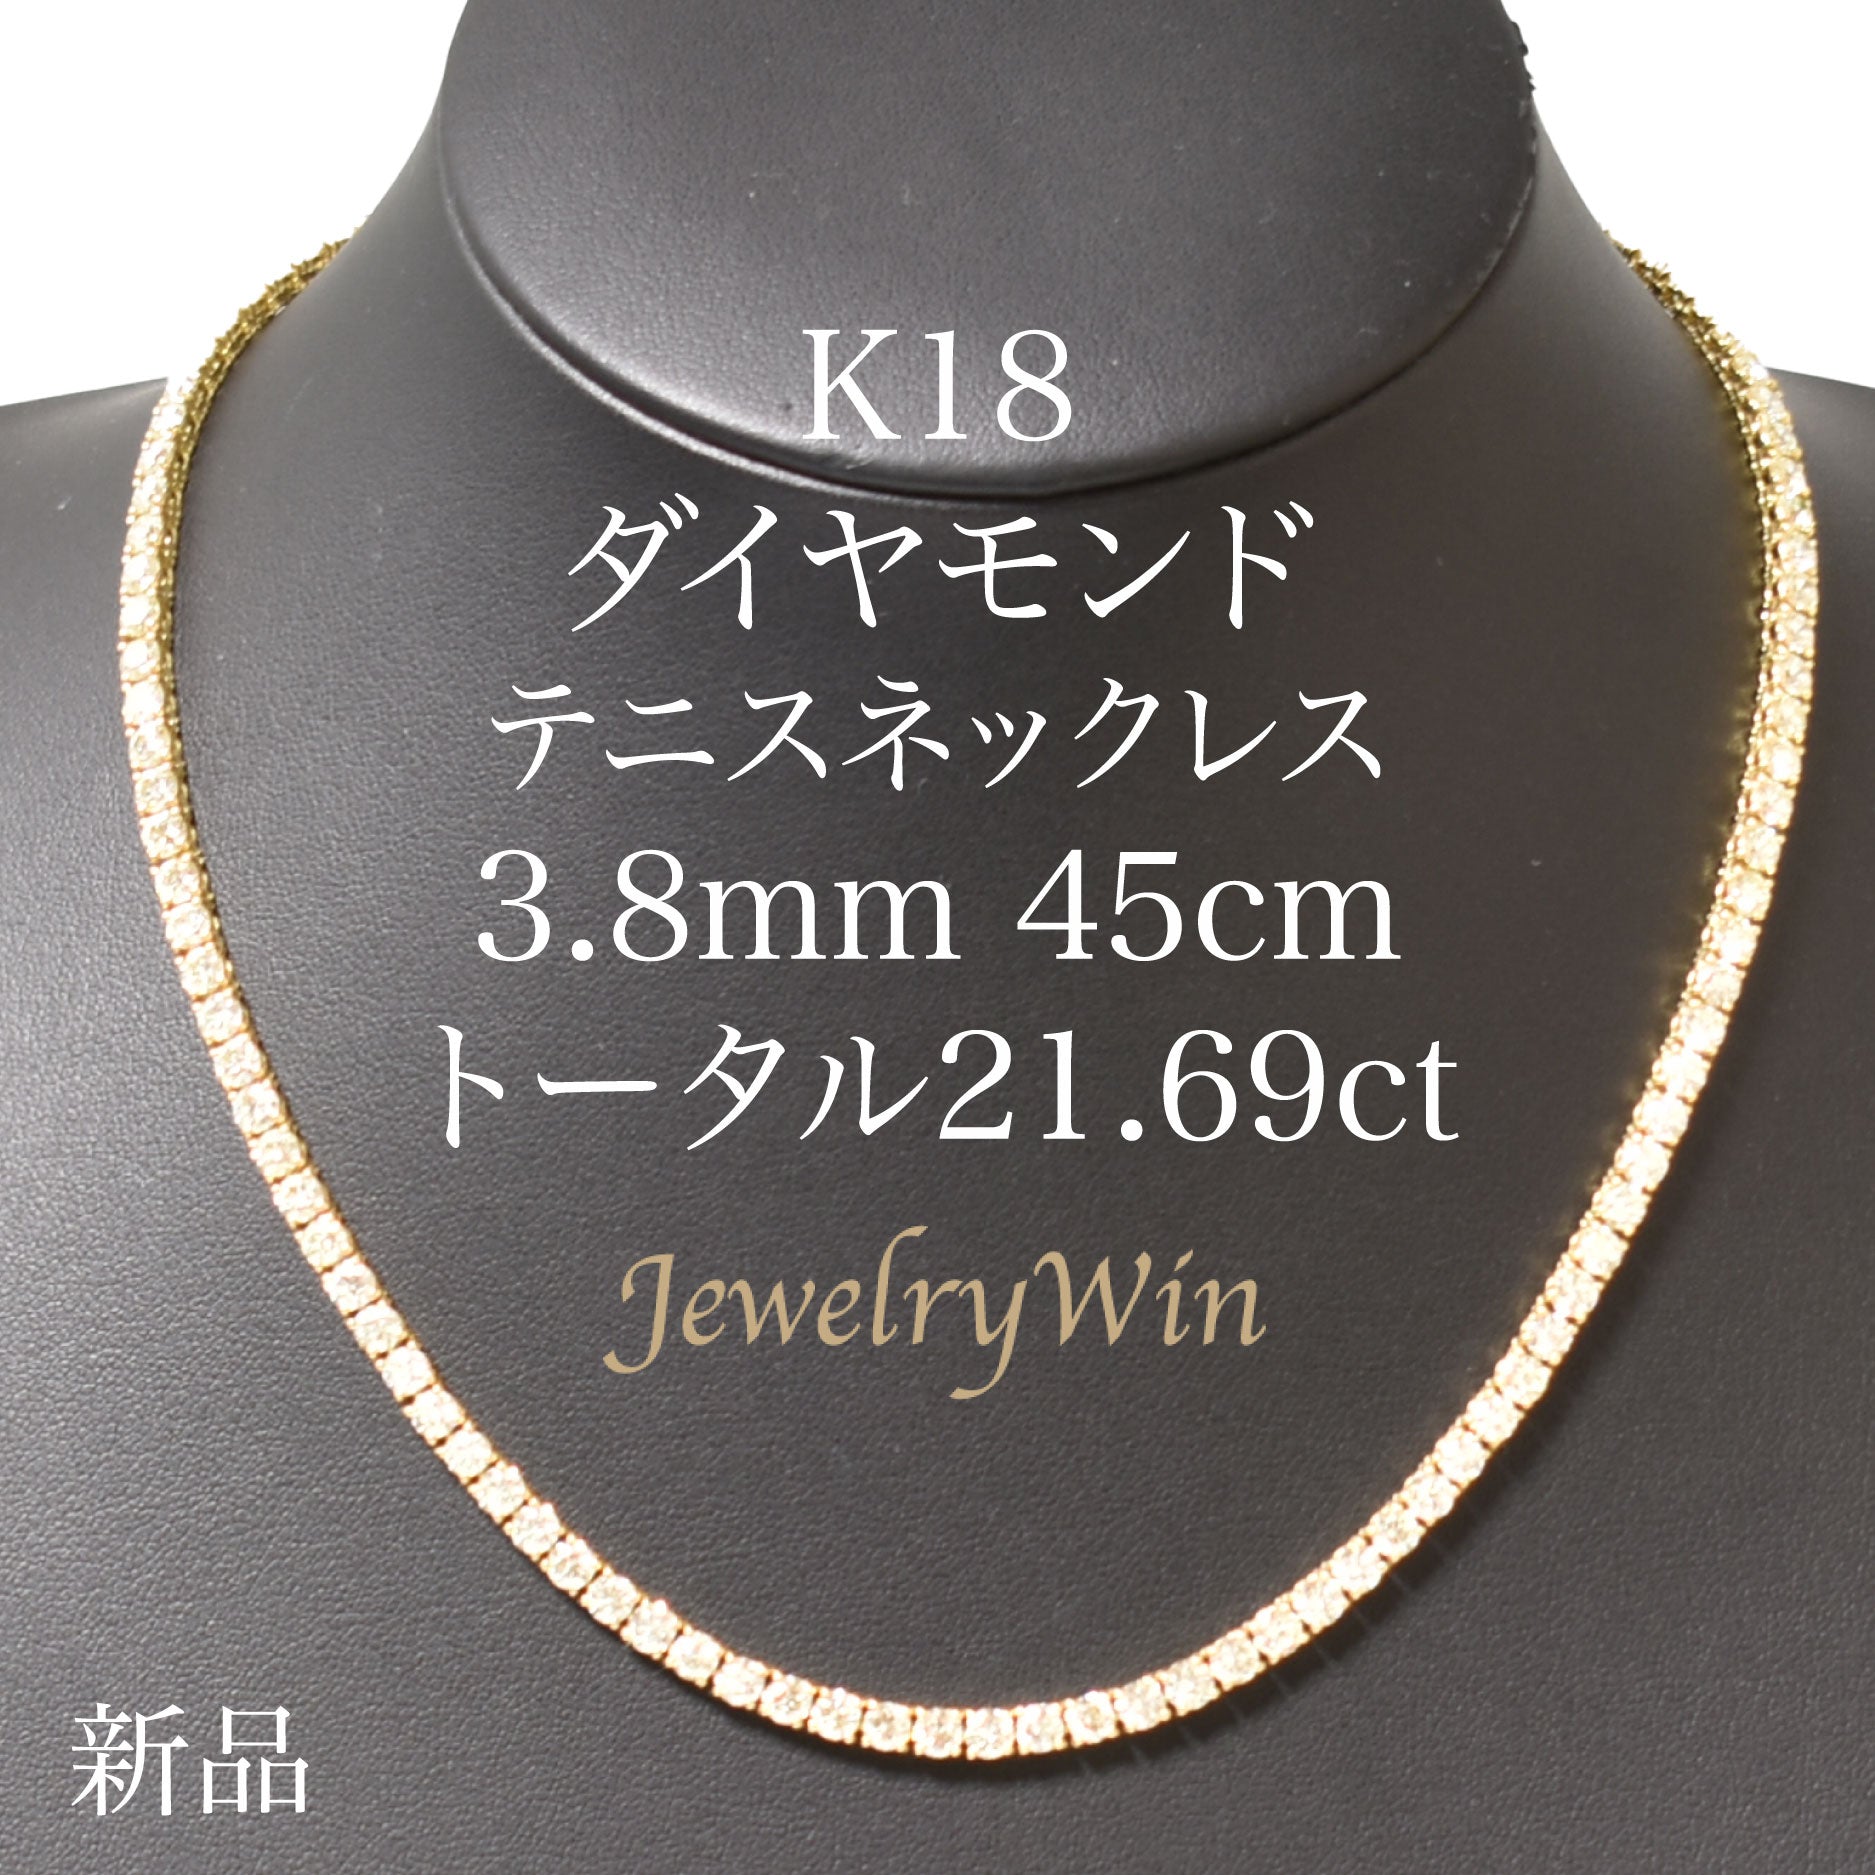 K18WG ダイヤモンド ネックレス BD0.84 D0.44 45cm 仕上げ